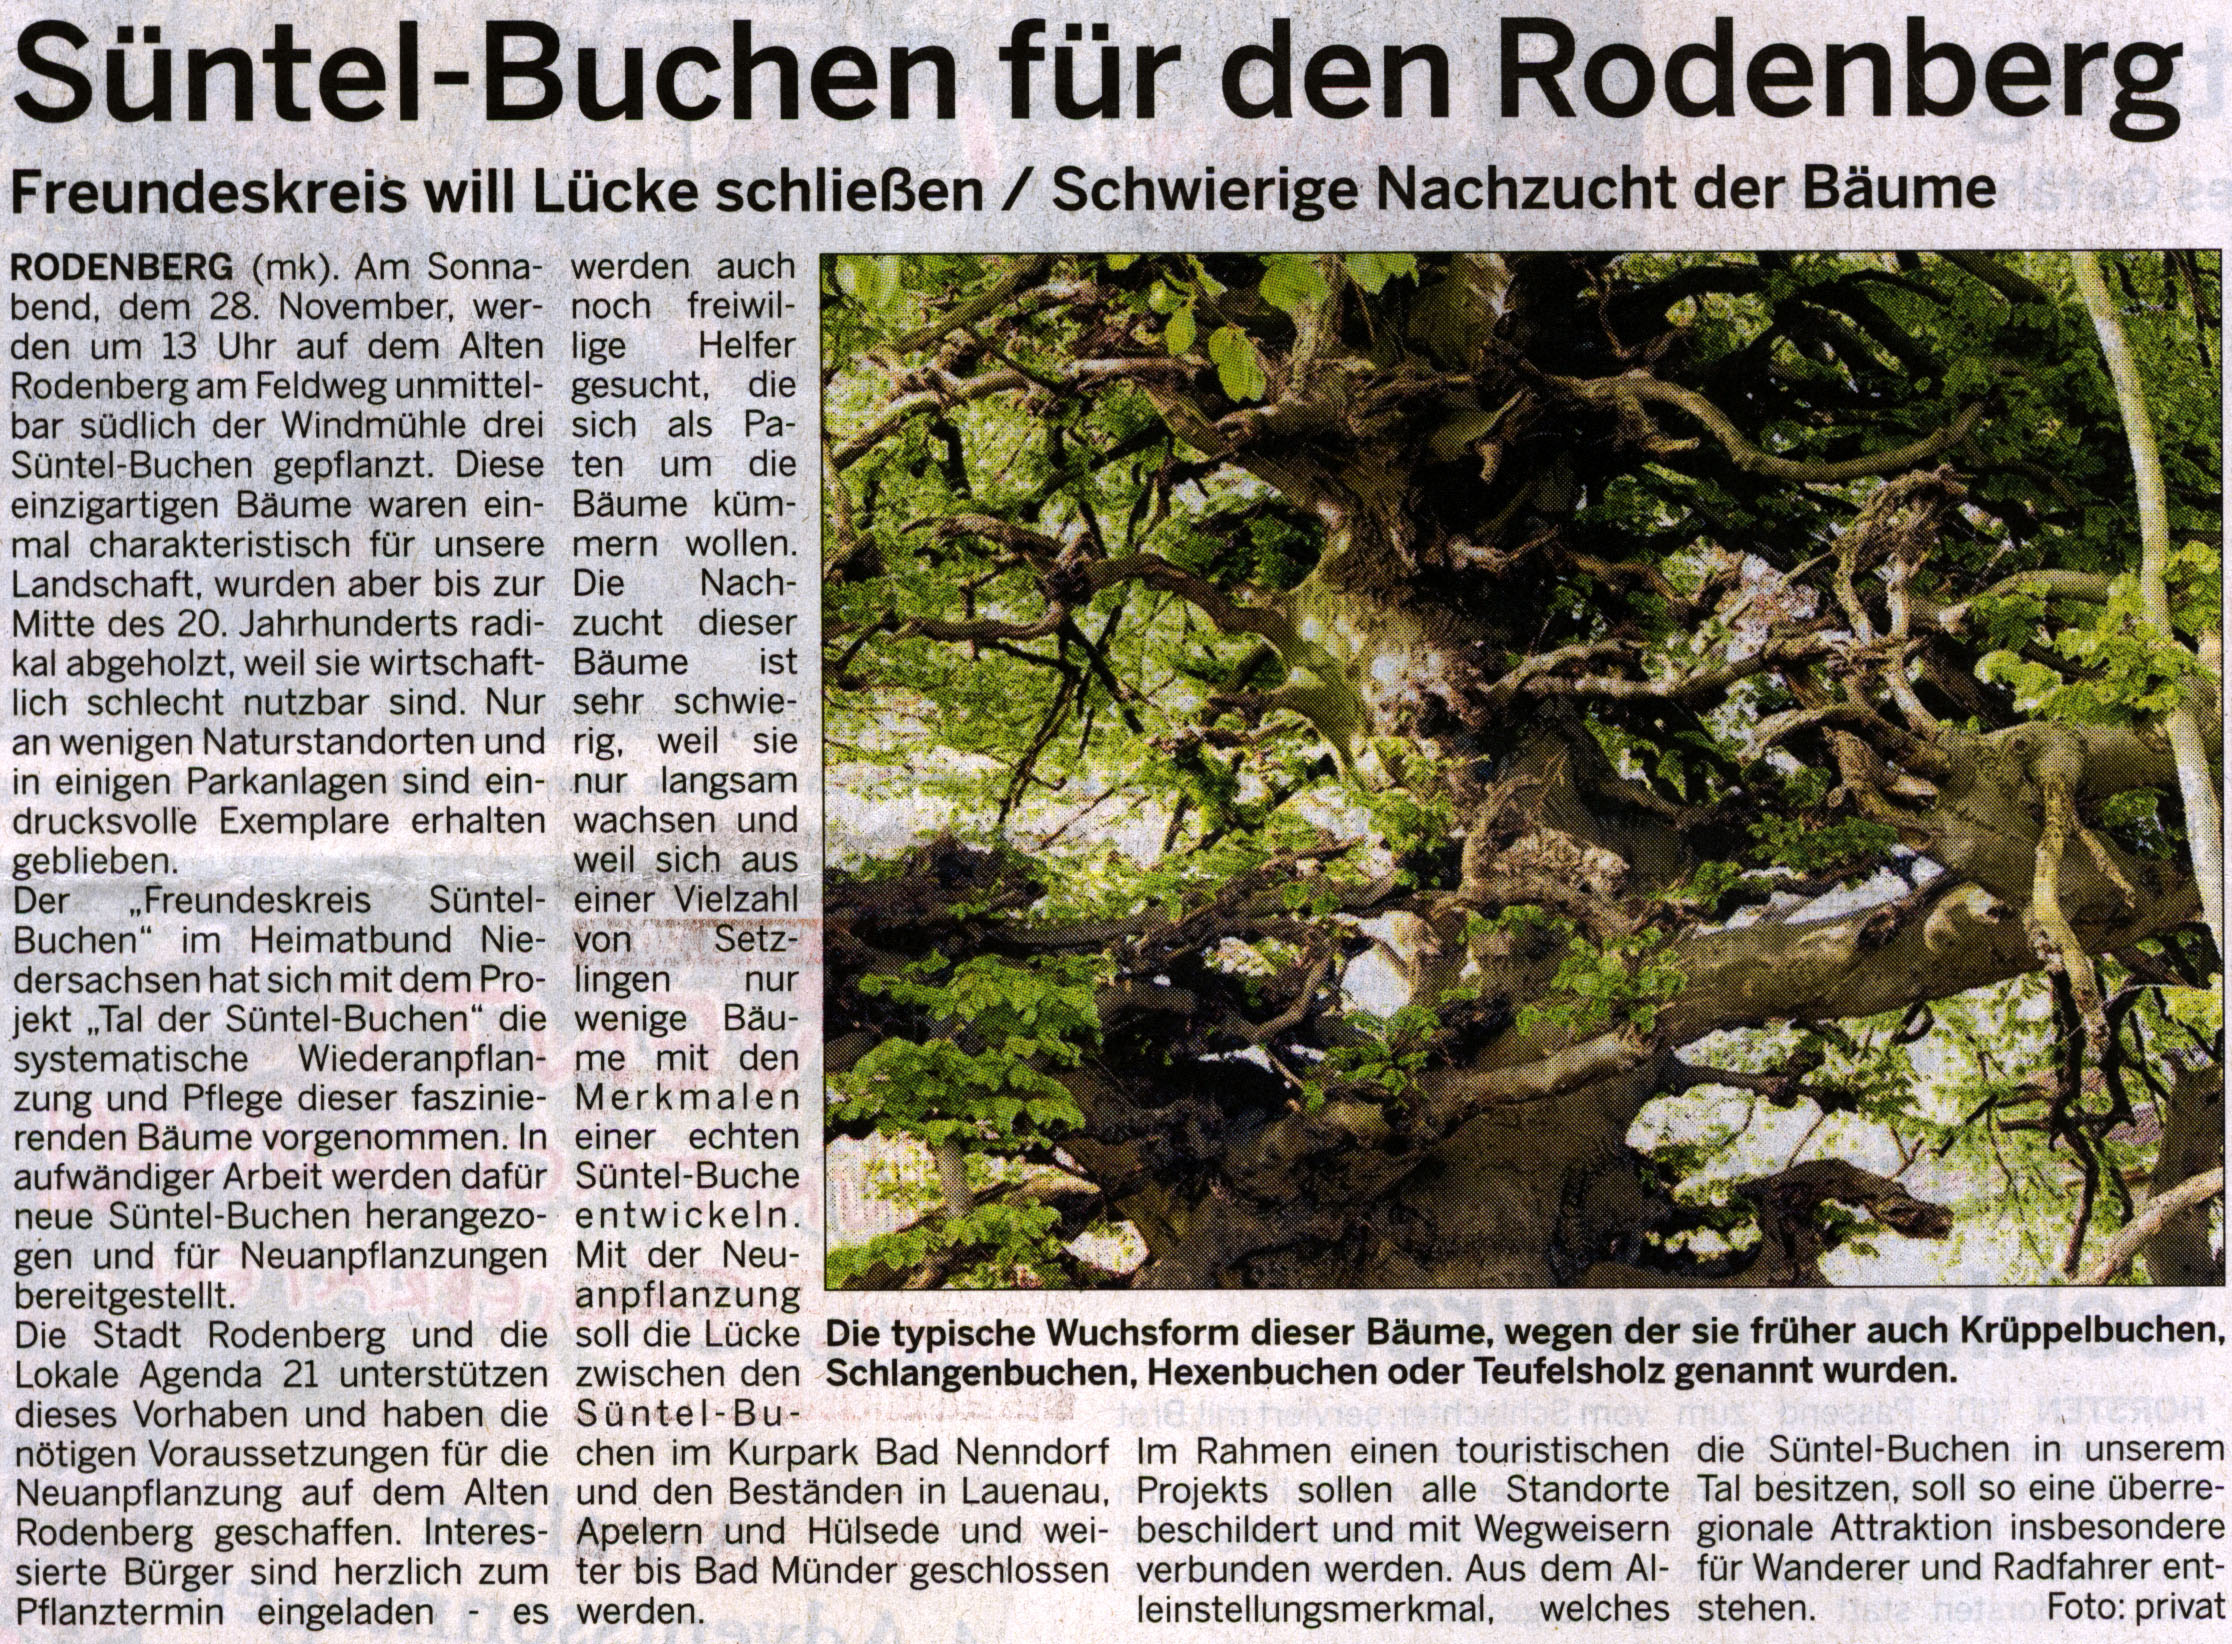 Schaumburger Wochenblatt 25. November 2015, Seite 15